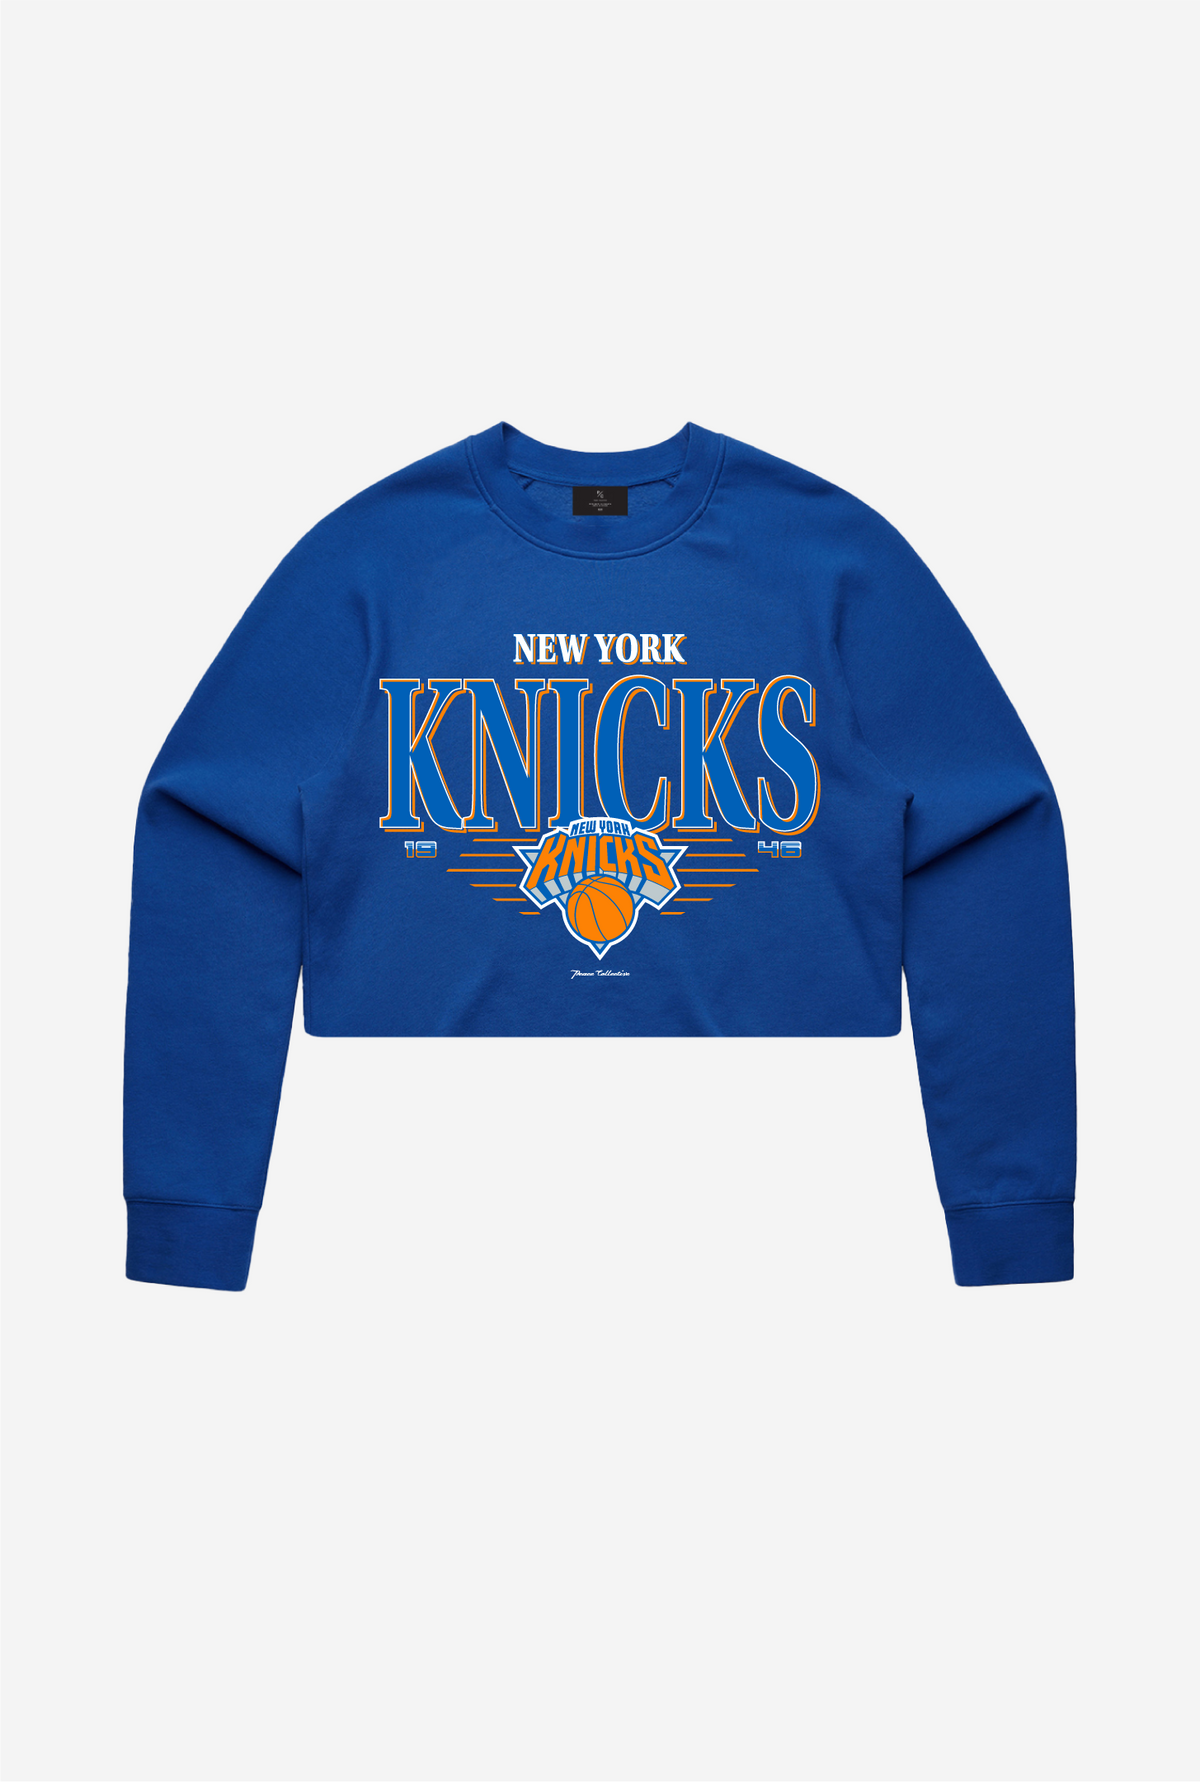 New York Knicks Signature Cropped Crewneck - Royal